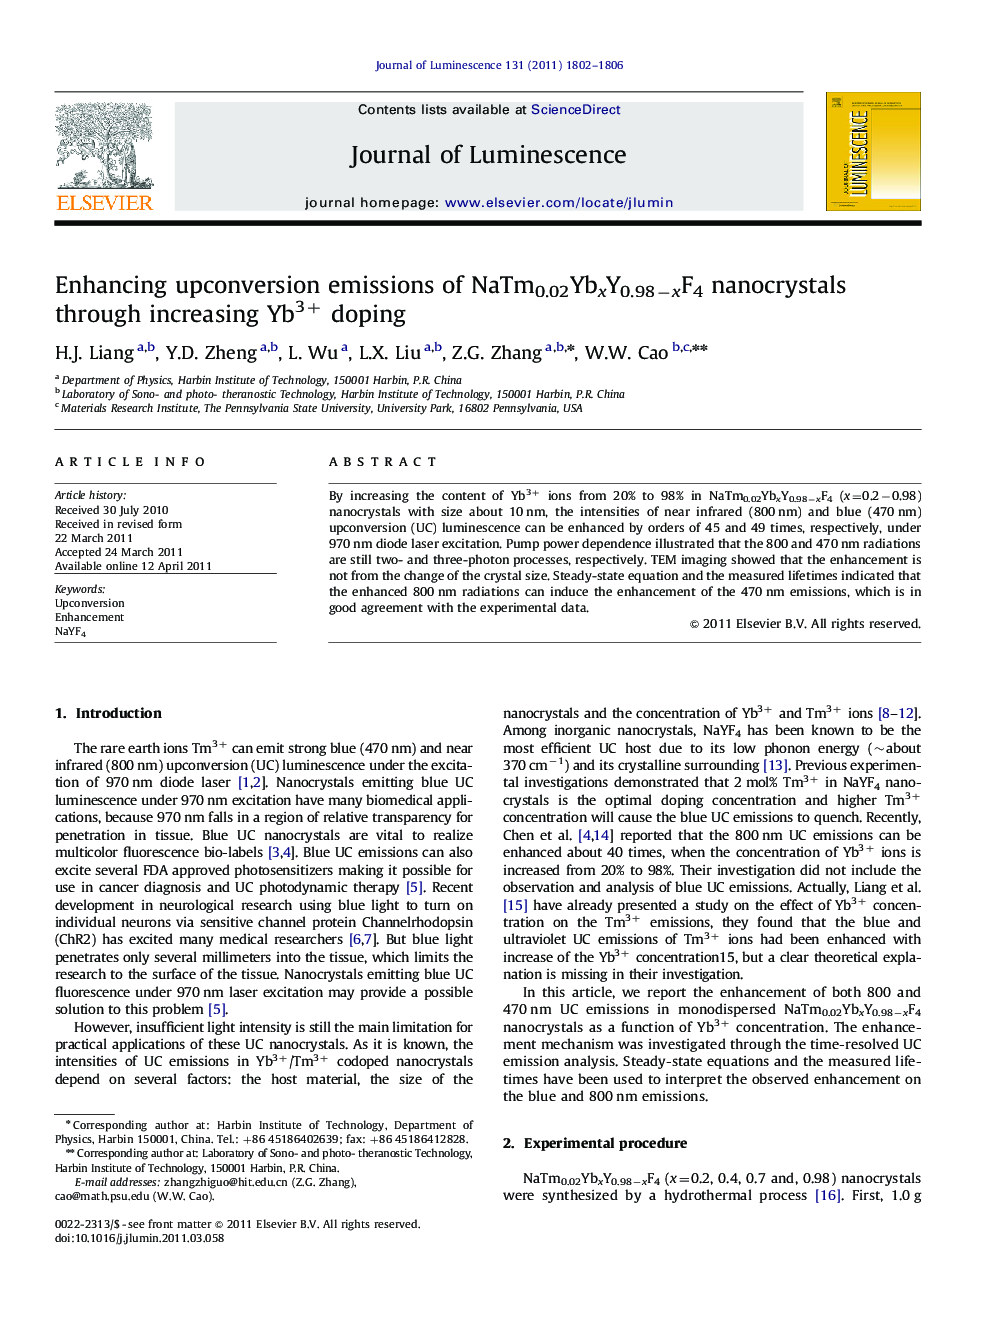 Enhancing upconversion emissions of NaTm0.02YbxY0.98âxF4 nanocrystals through increasing Yb3+ doping